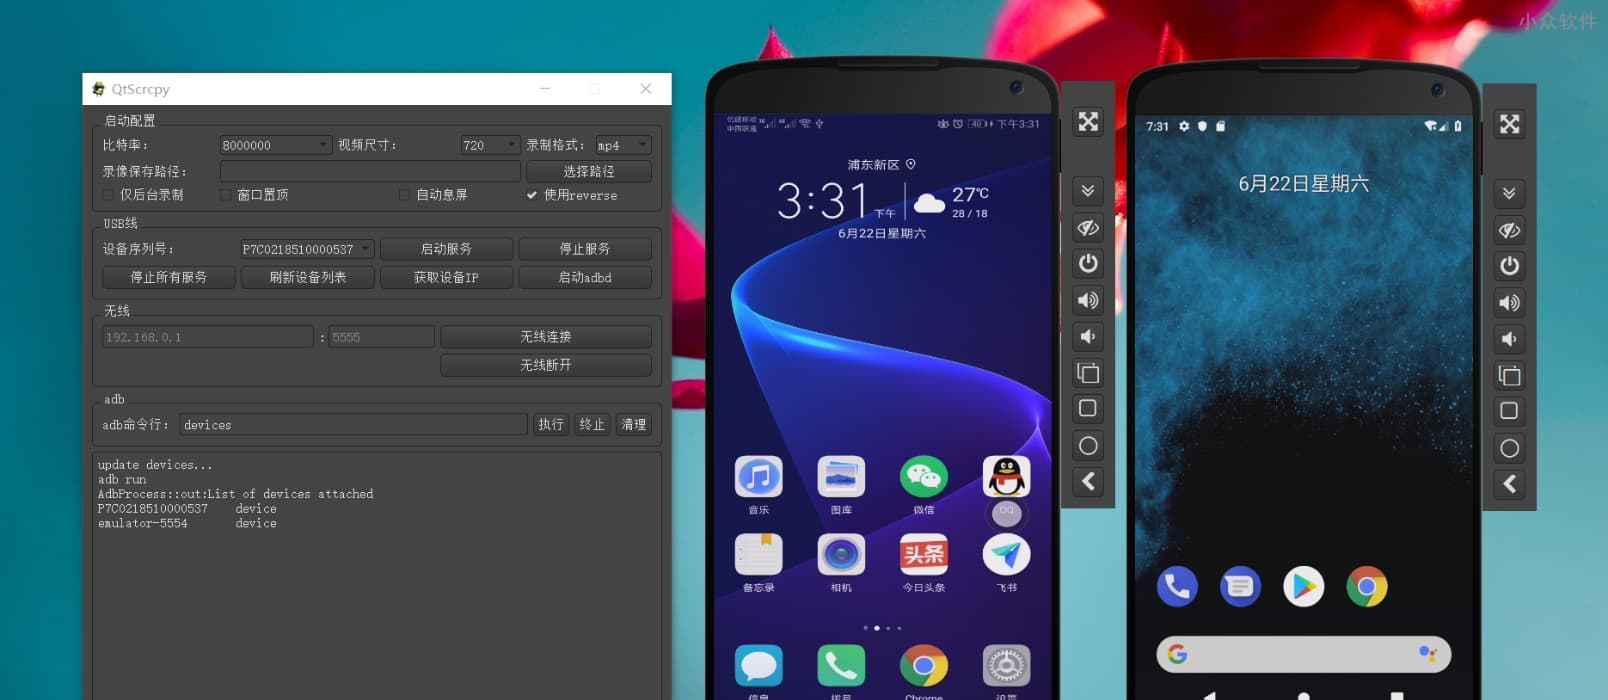 QtScrcpy – 用电脑控制 Android 手机，支持多点触控，可玩和平精英，中文界面[Win/macOS/Linux]